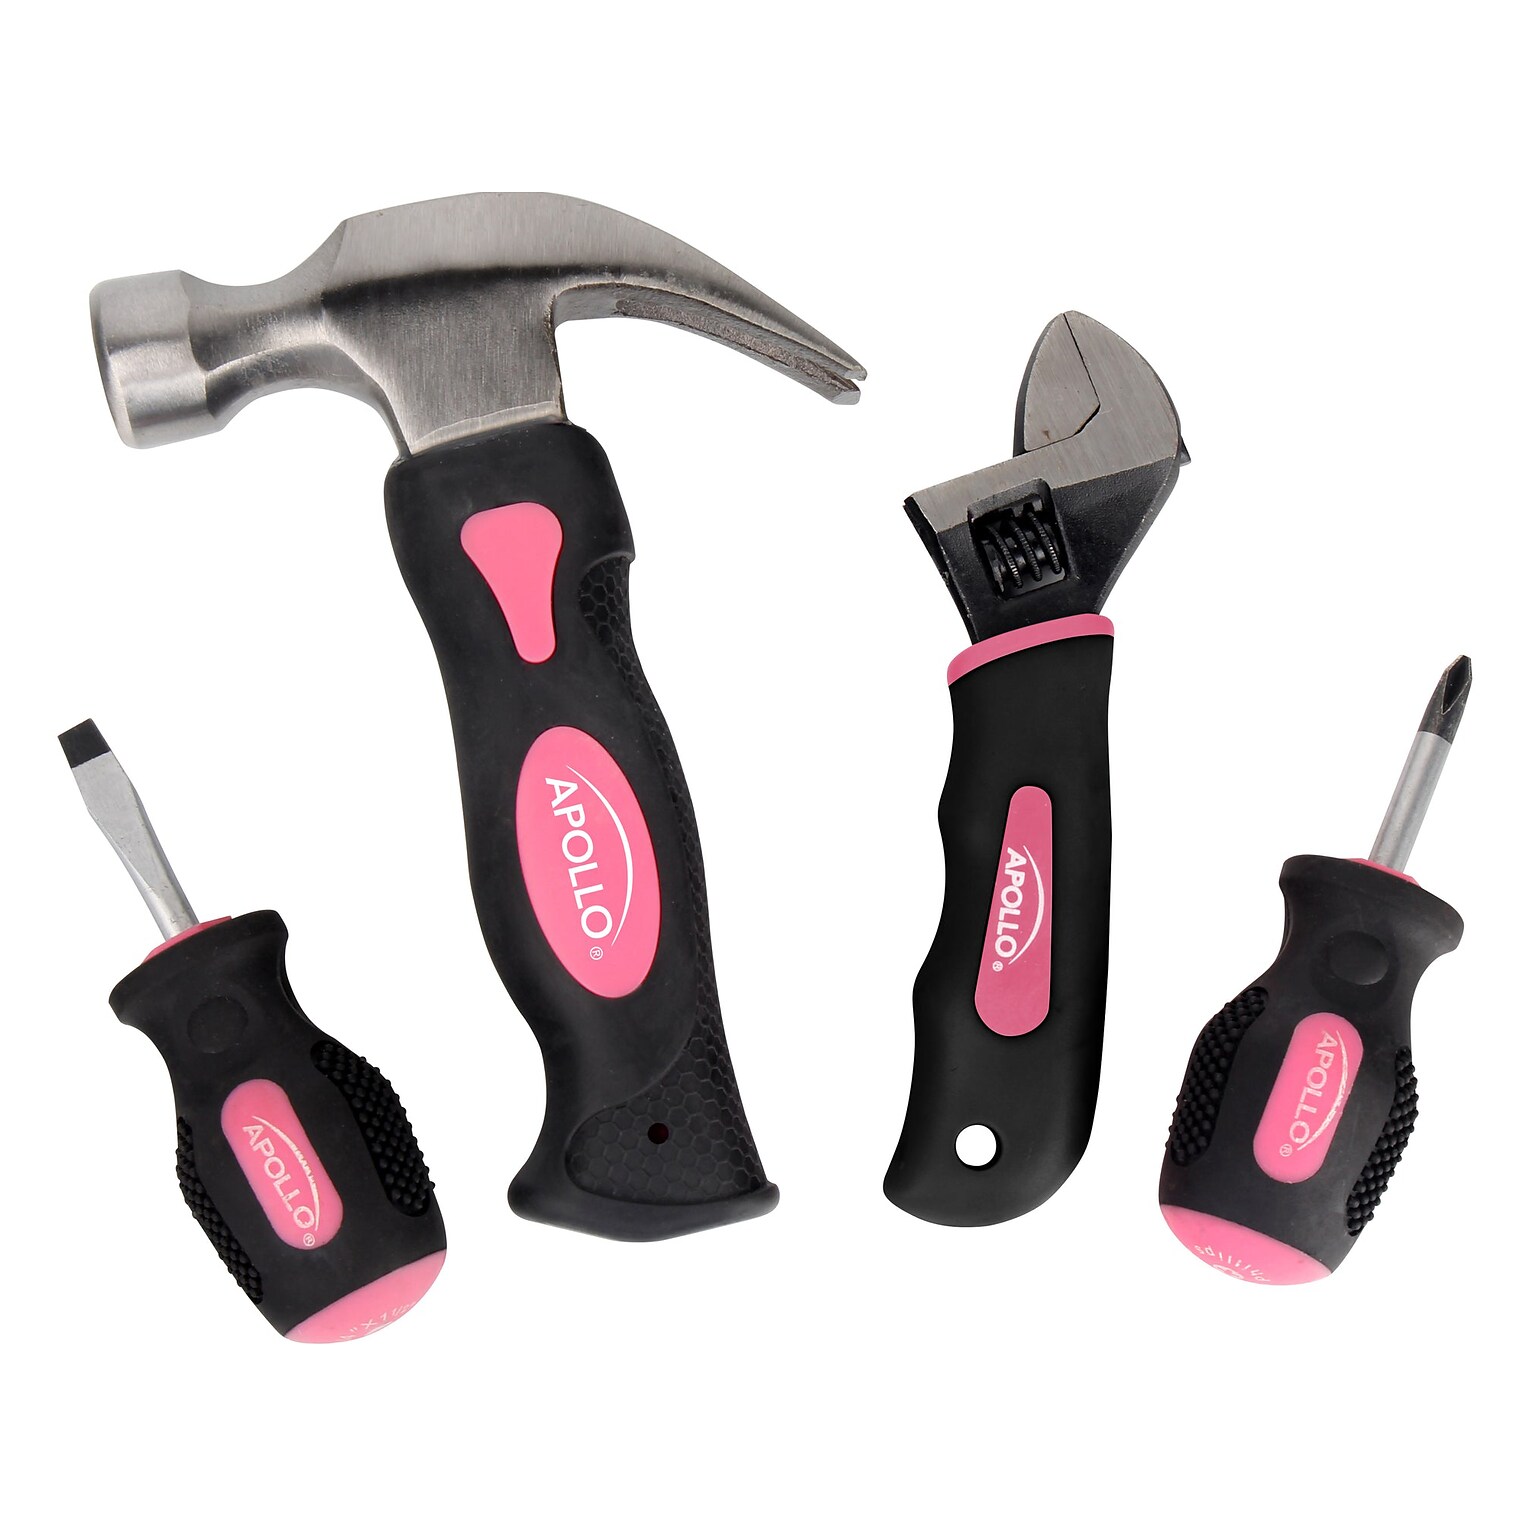 Apollo Tools Stubby Tool Set, 4-Piece, Pink/Black (DT0240P)